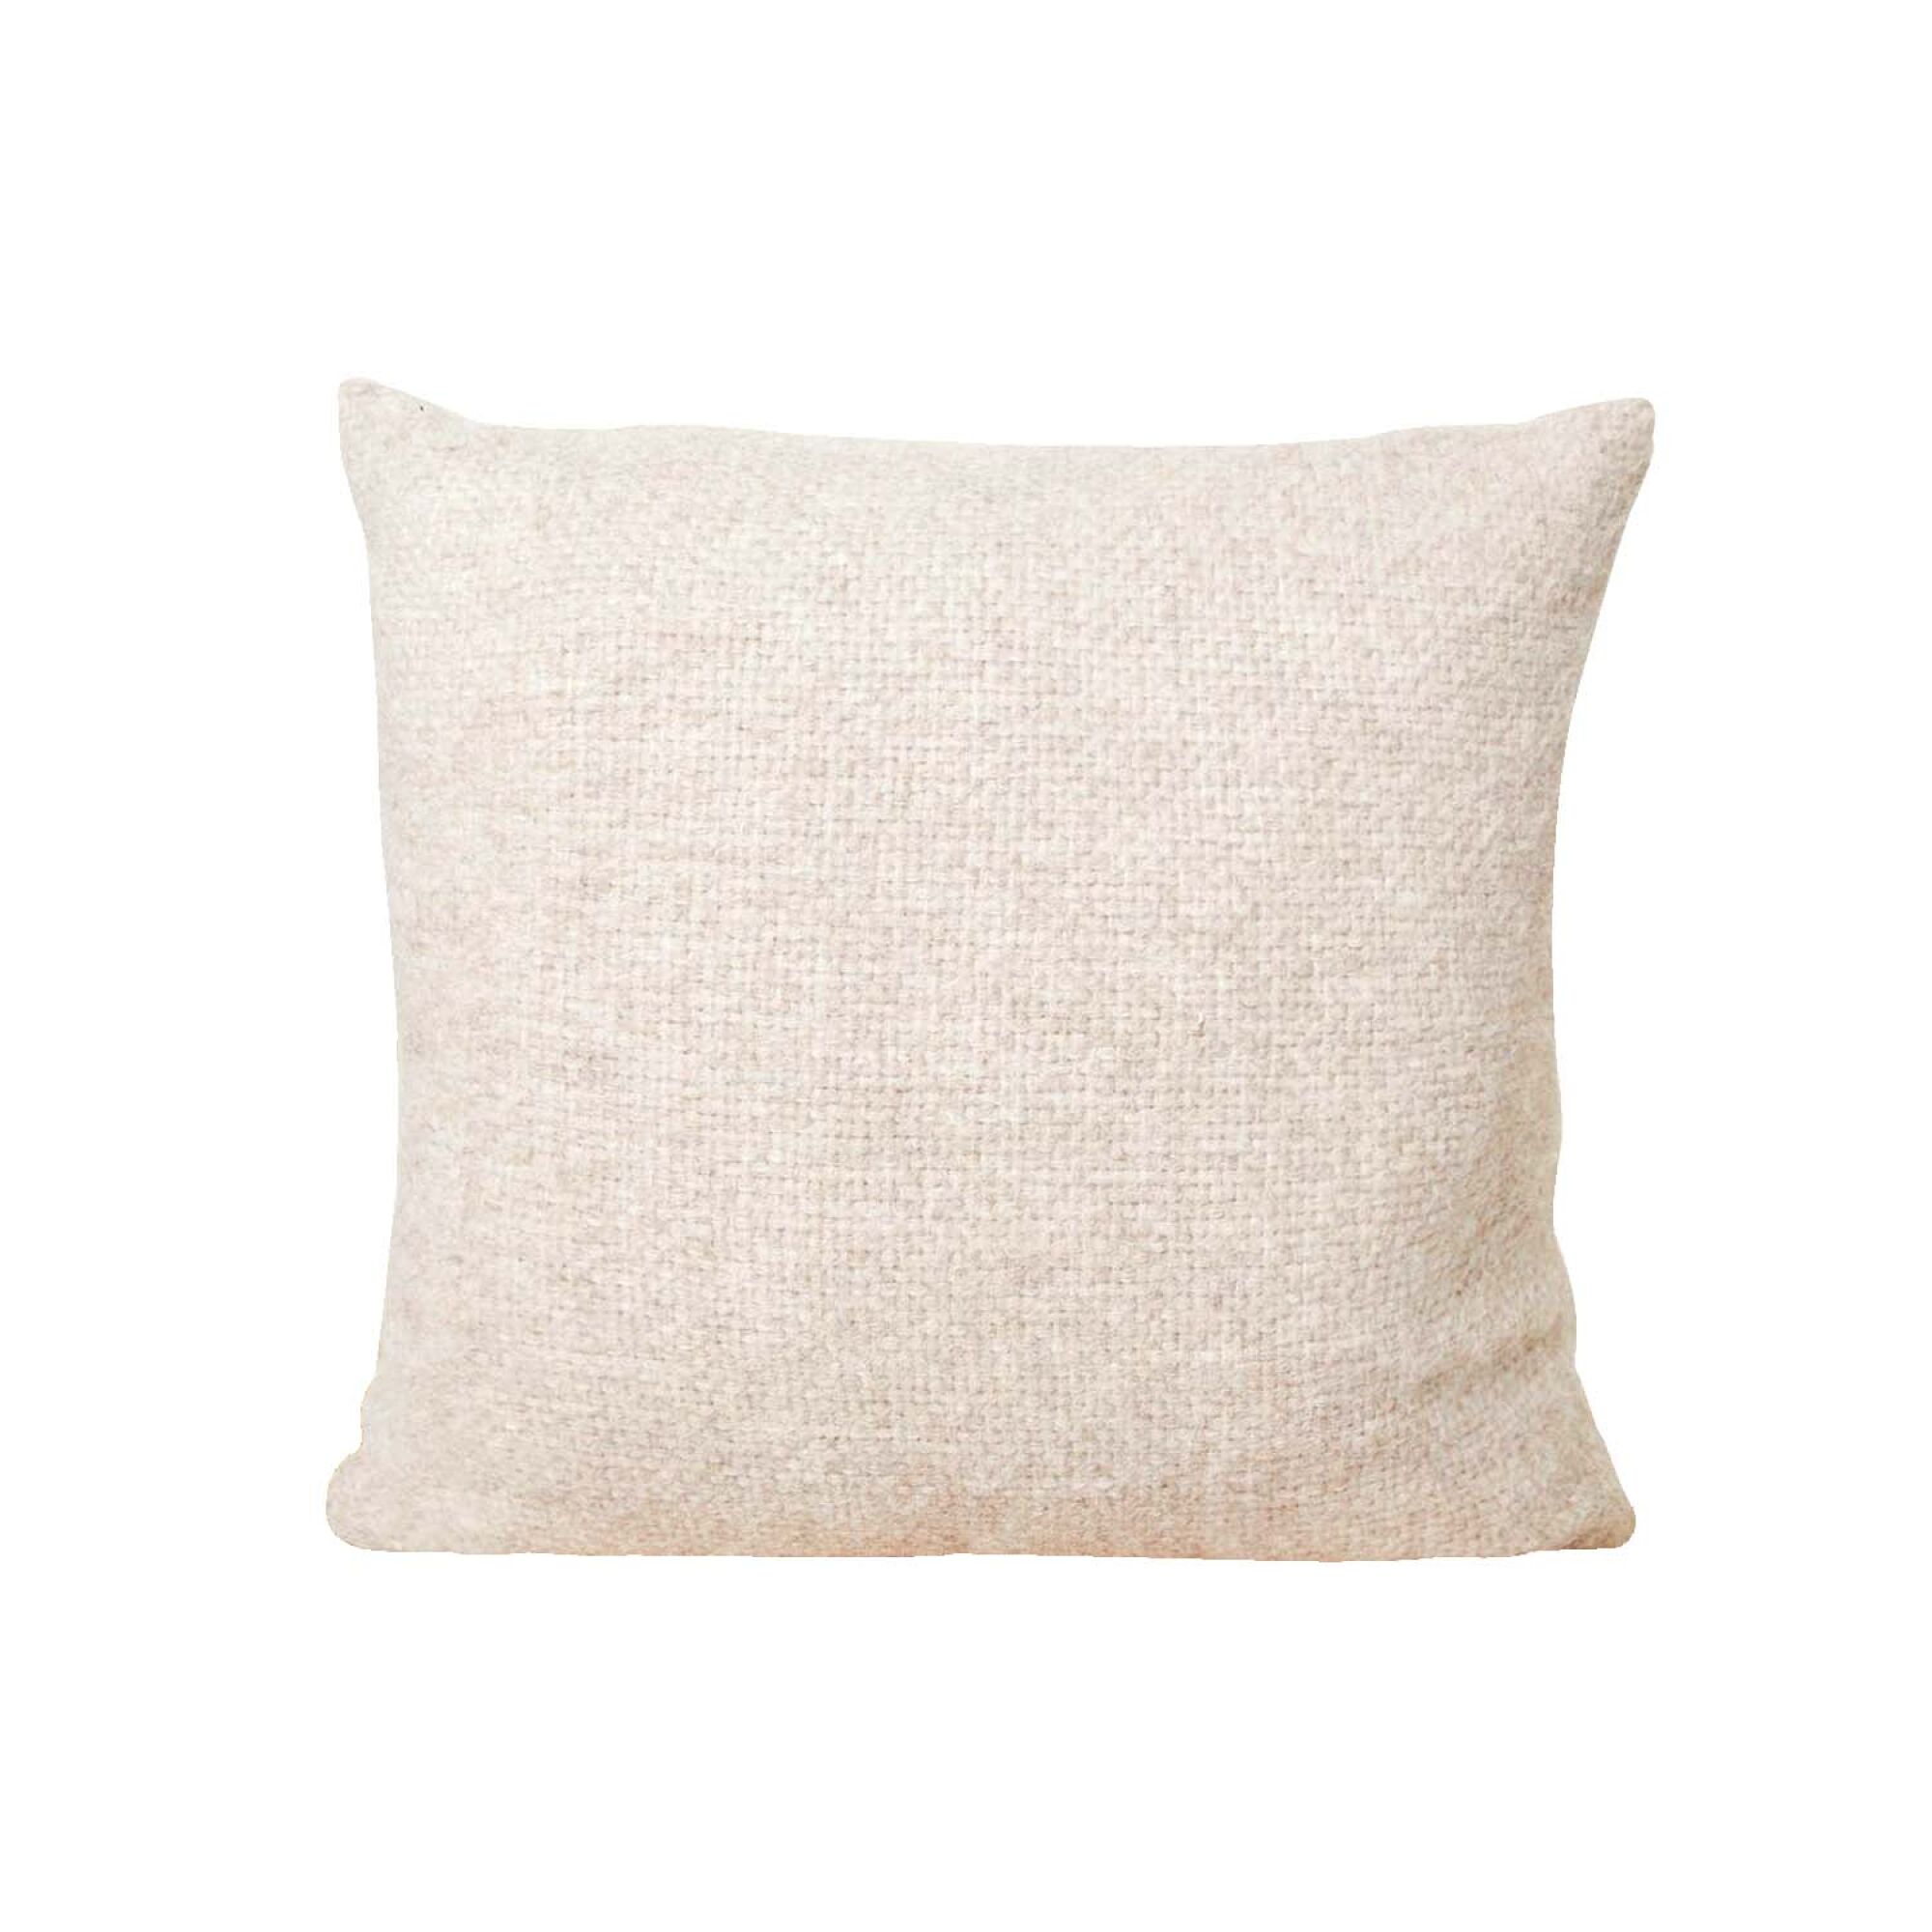 An alpaca basketweave pillow.